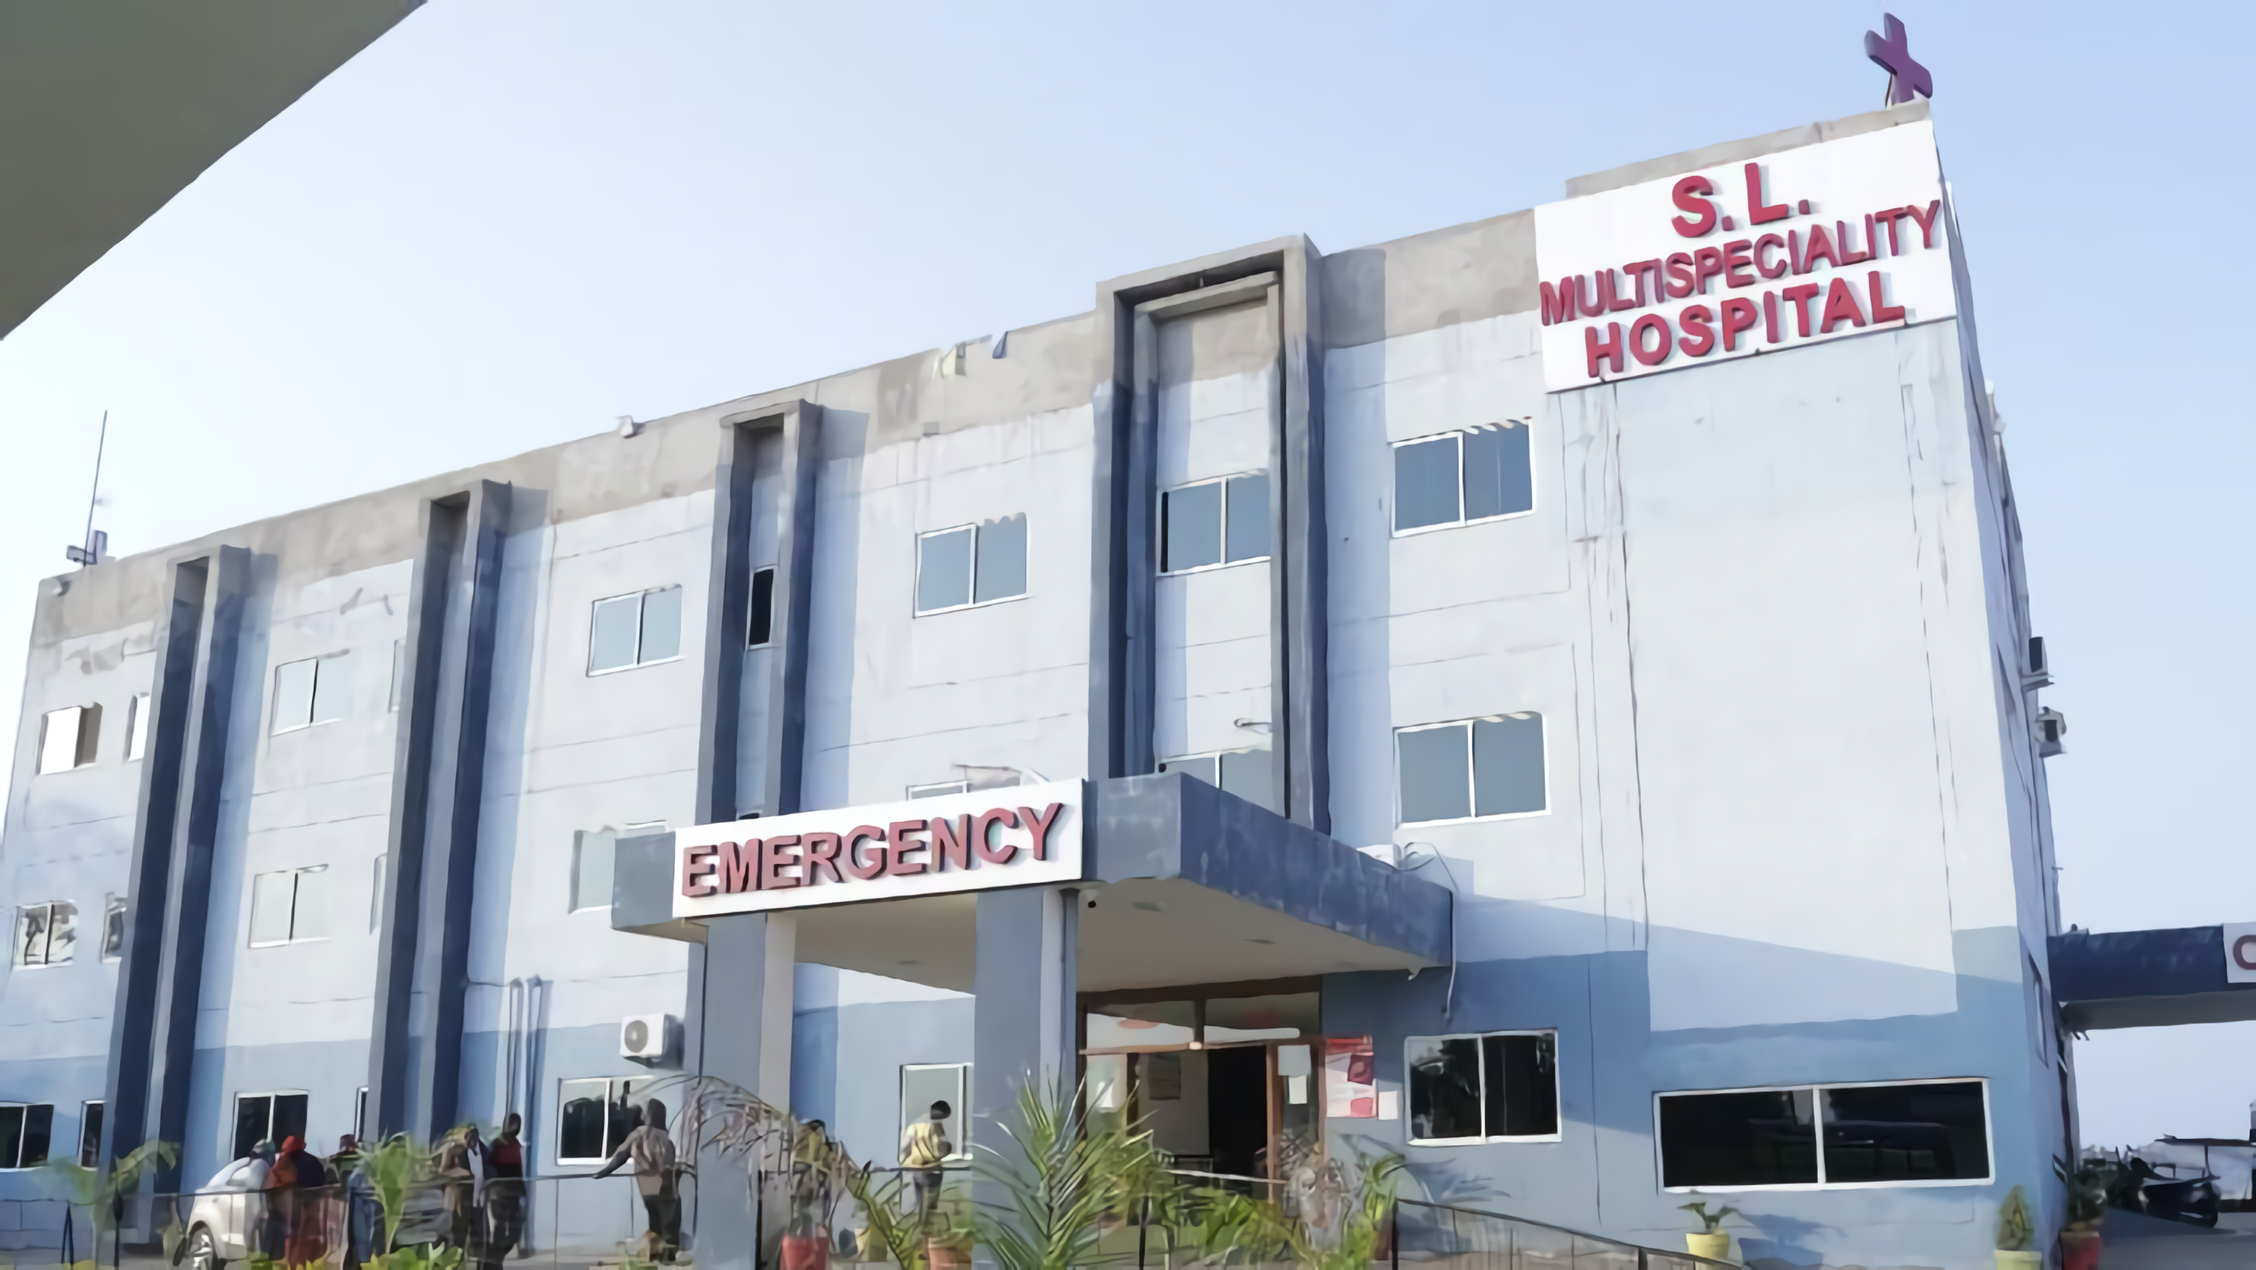 S. L. Multispeciality Hospital